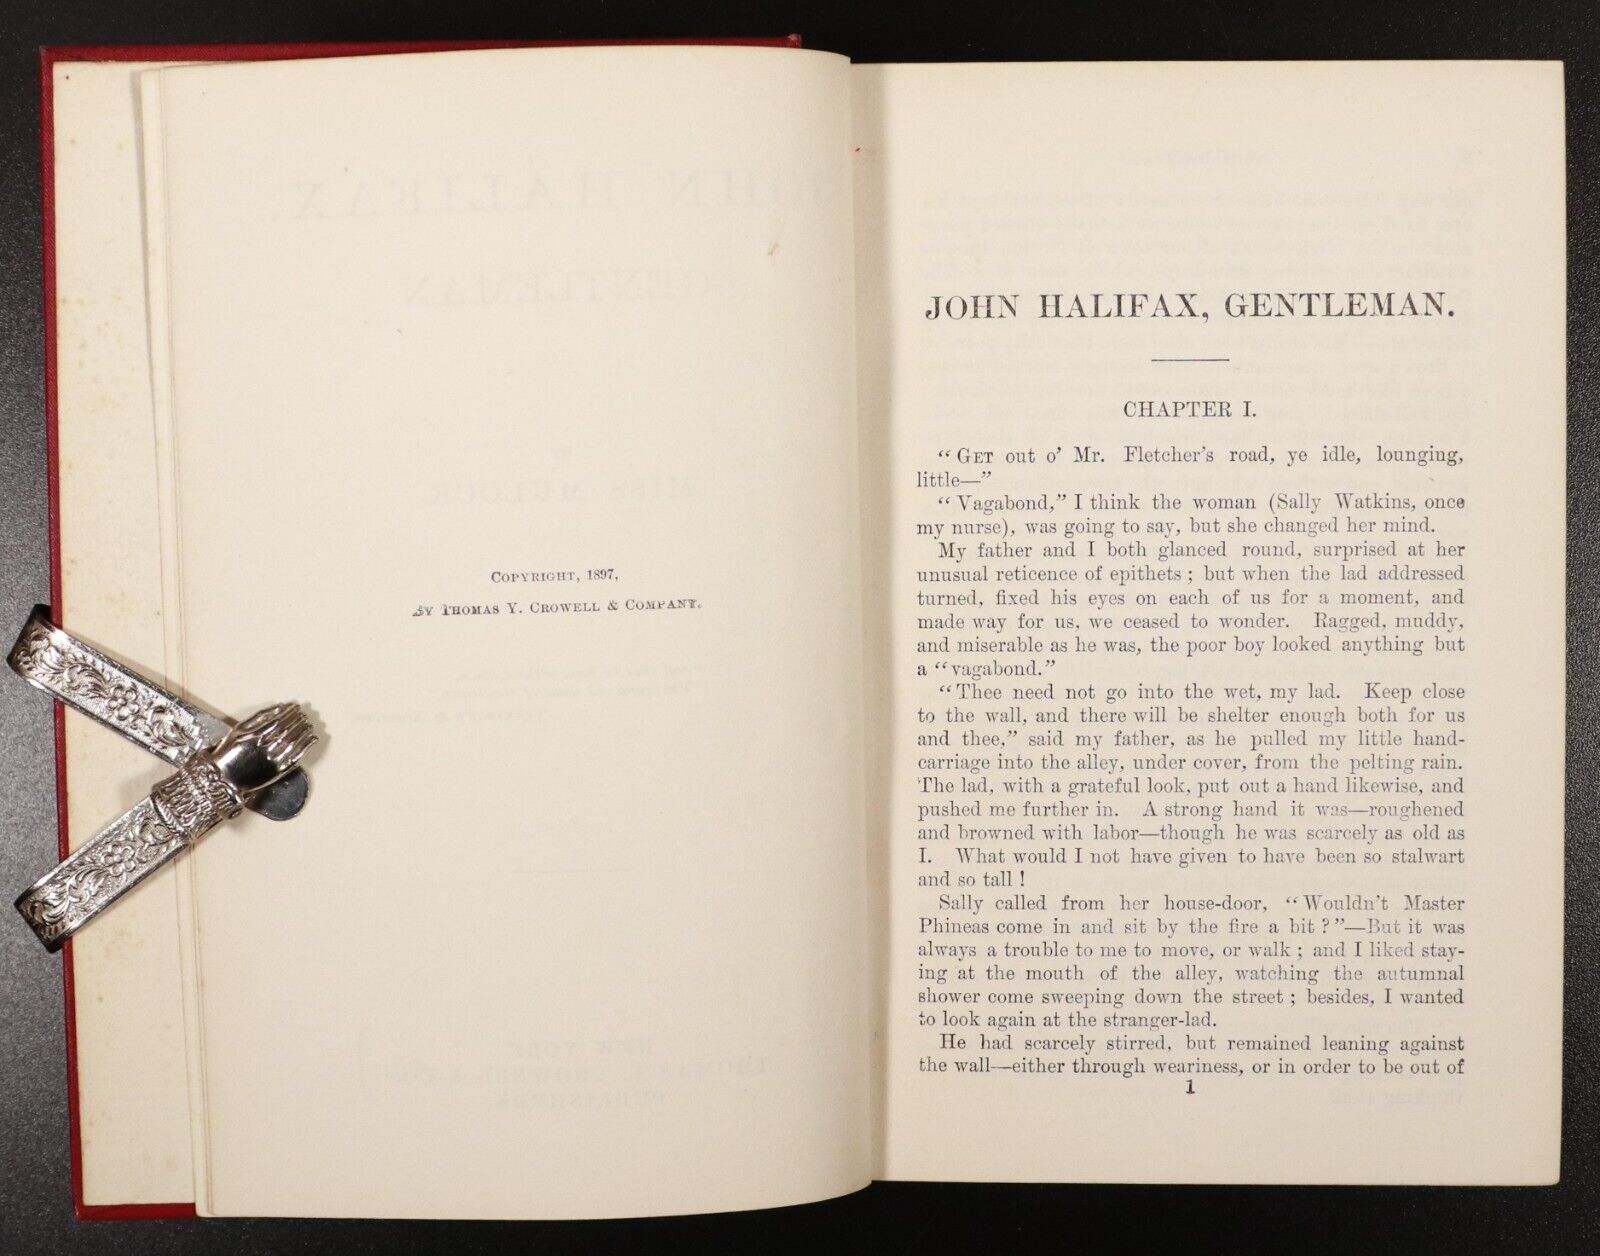 c1897 John Halifax, Gentleman by Miss Mulock Antiquarian British Literature Book